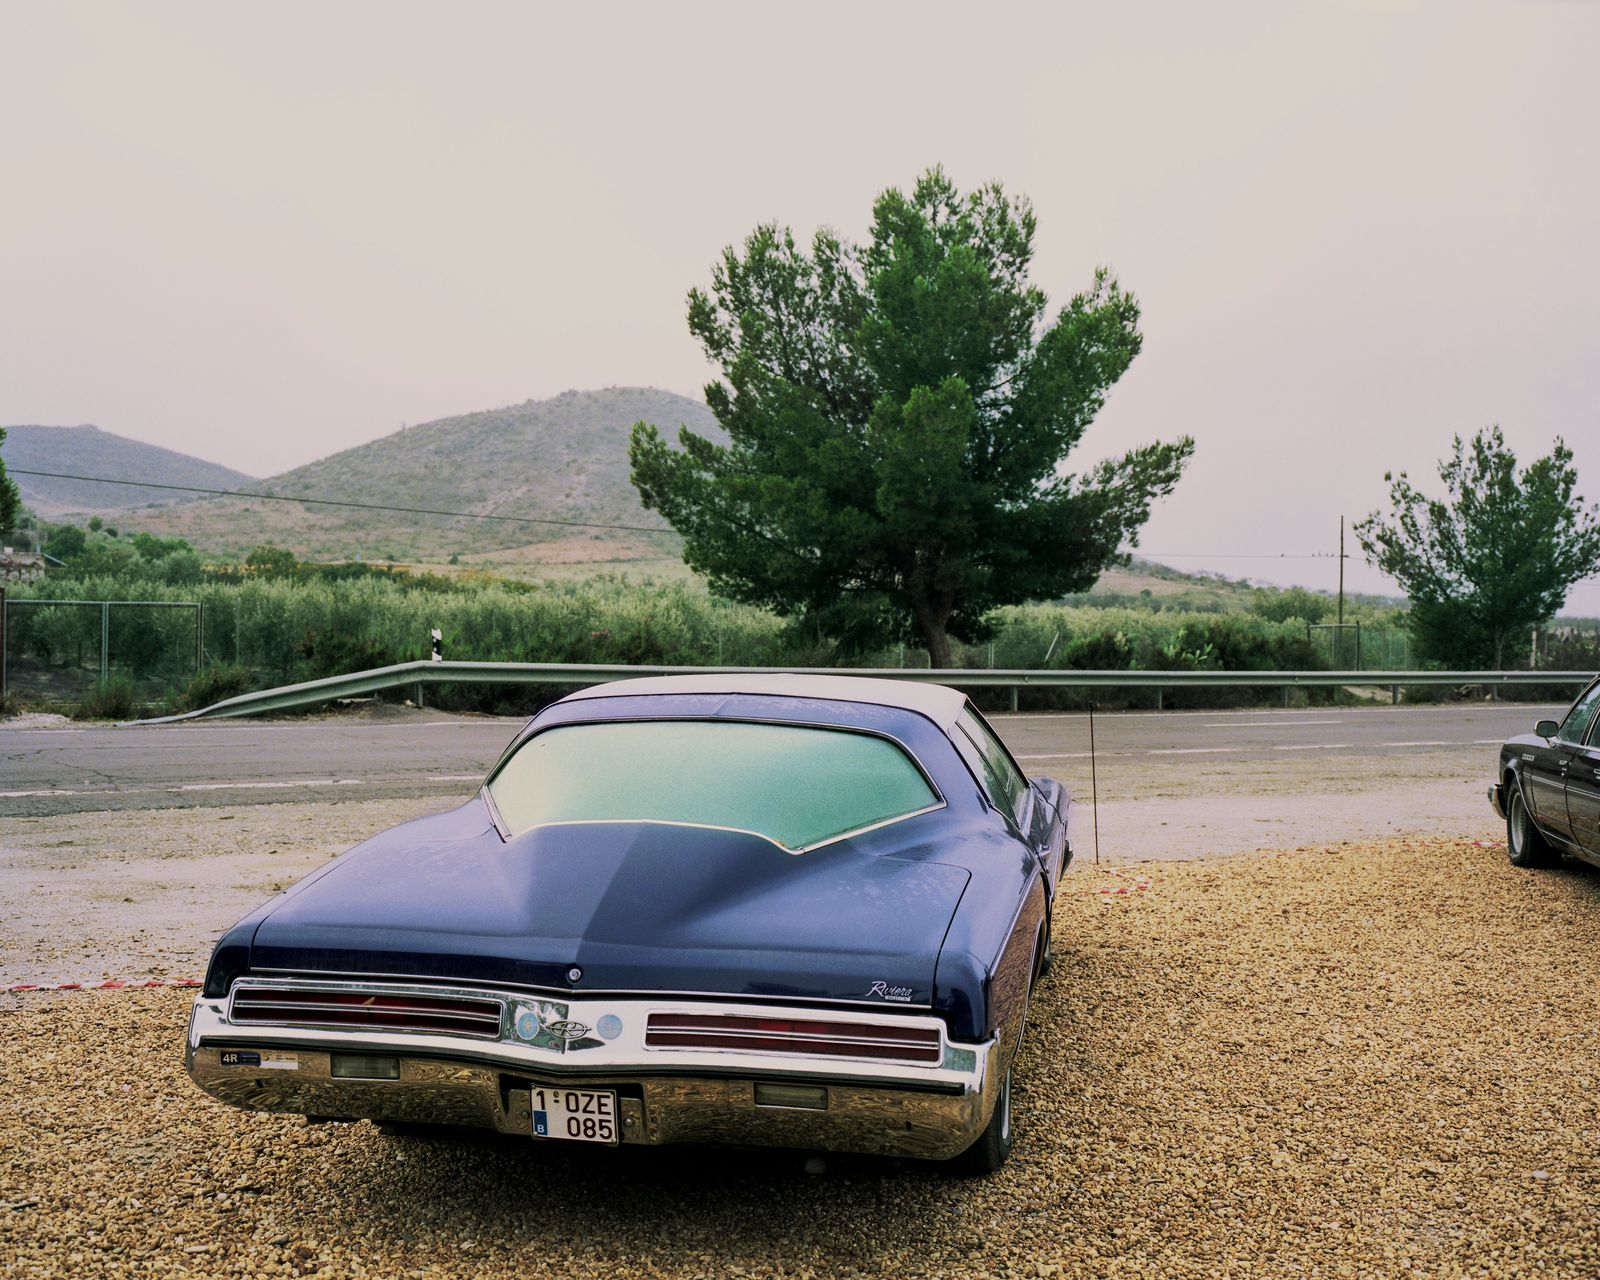 © Alvaro Deprit - 1973 Buick Riviera 1973. The personal luxury car.